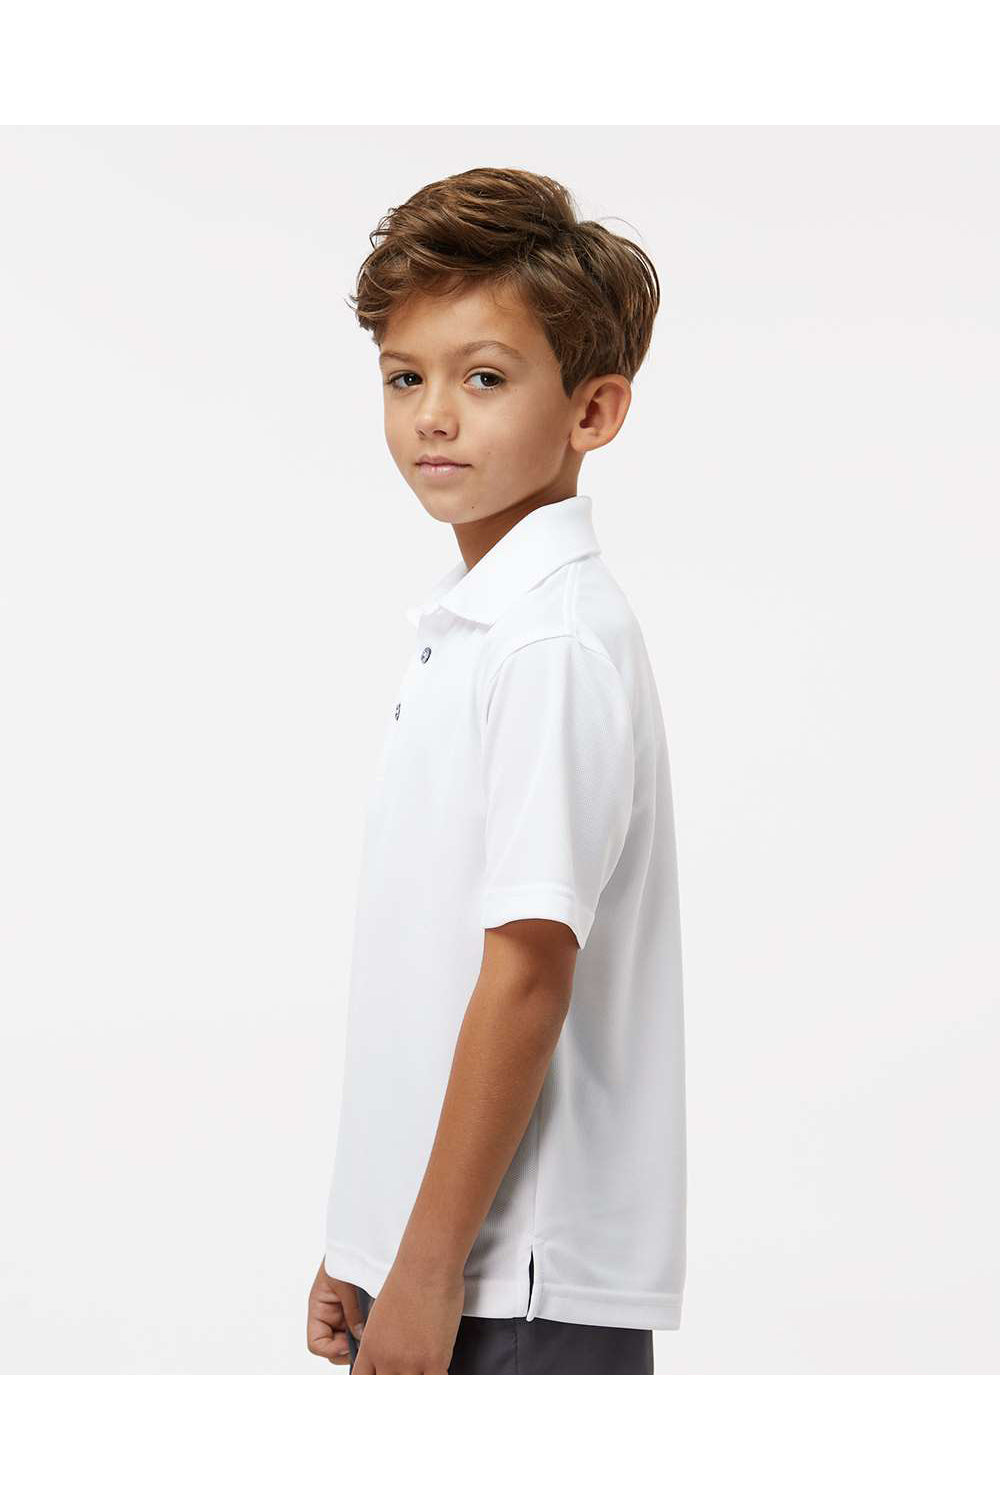 Paragon 108Y Youth Saratoga Performance Mini Mesh Short Sleeve Polo Shirt White Model Side